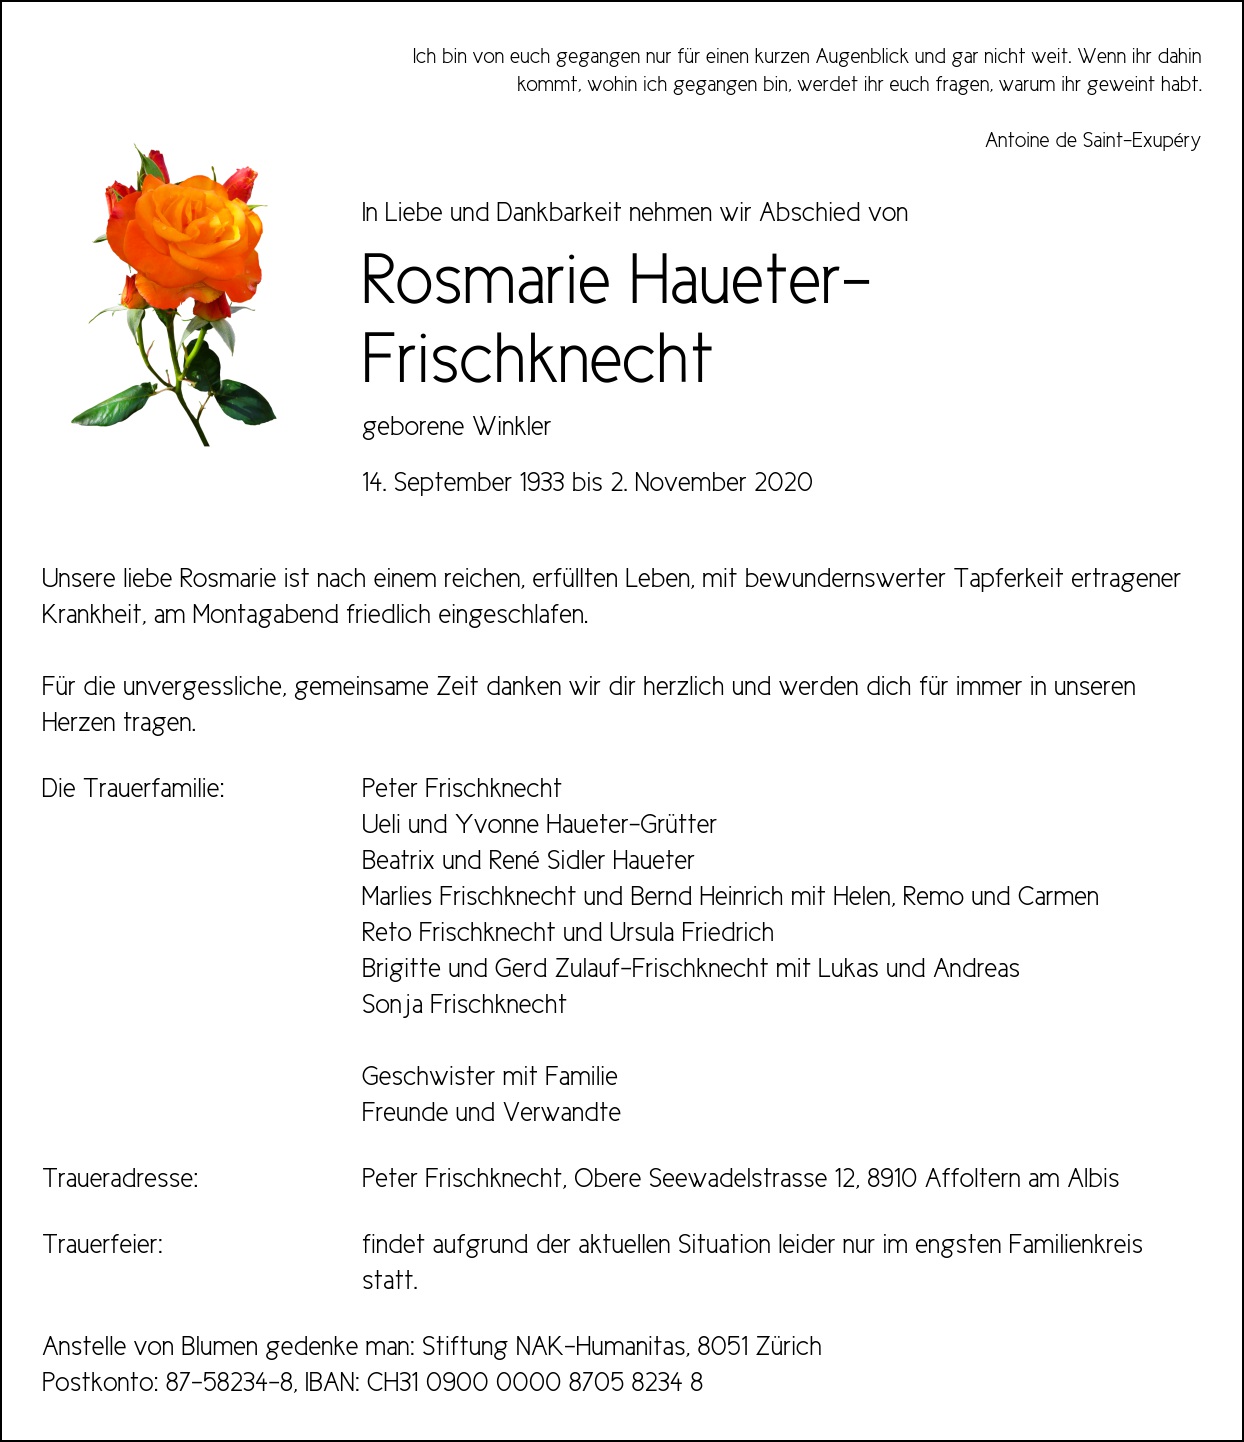 Rosmarie Haueter-Frischknecht